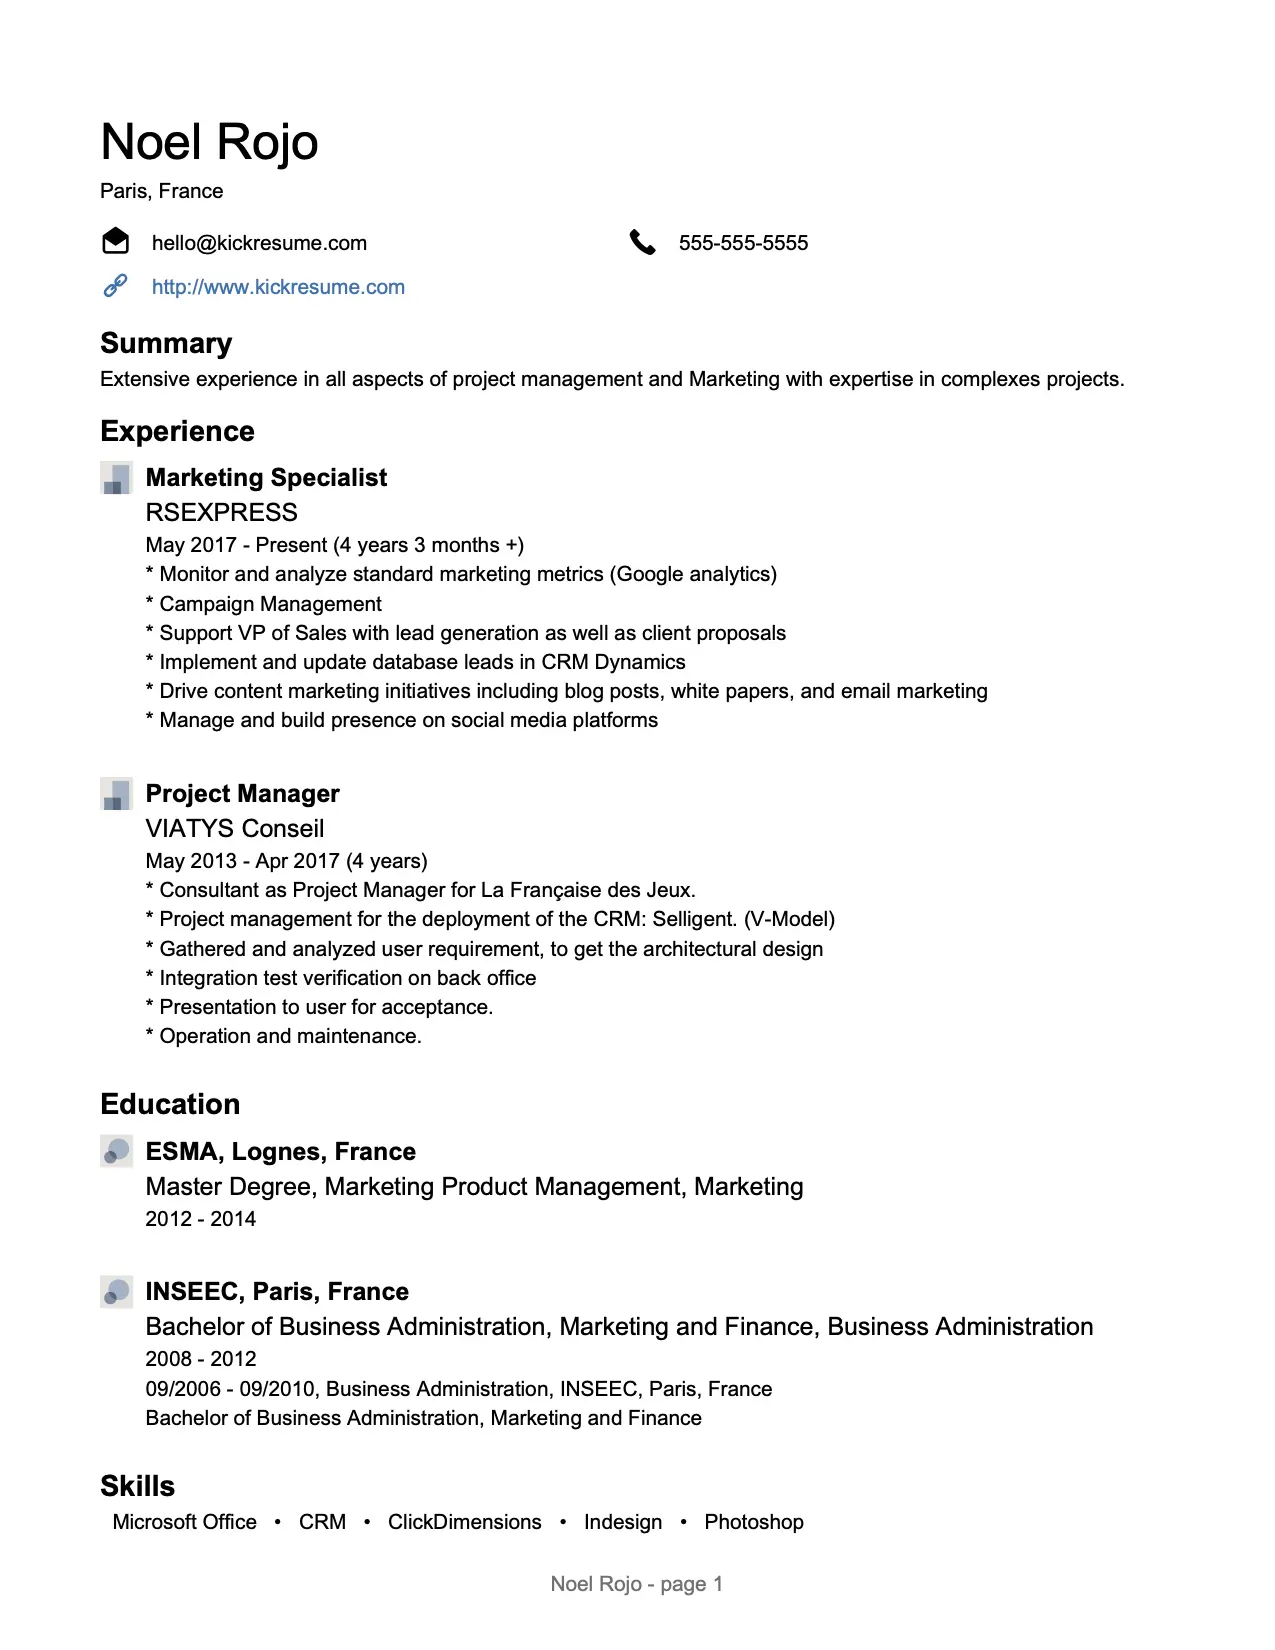 LinkedIn Resume Builder Download a Resume as a PDF